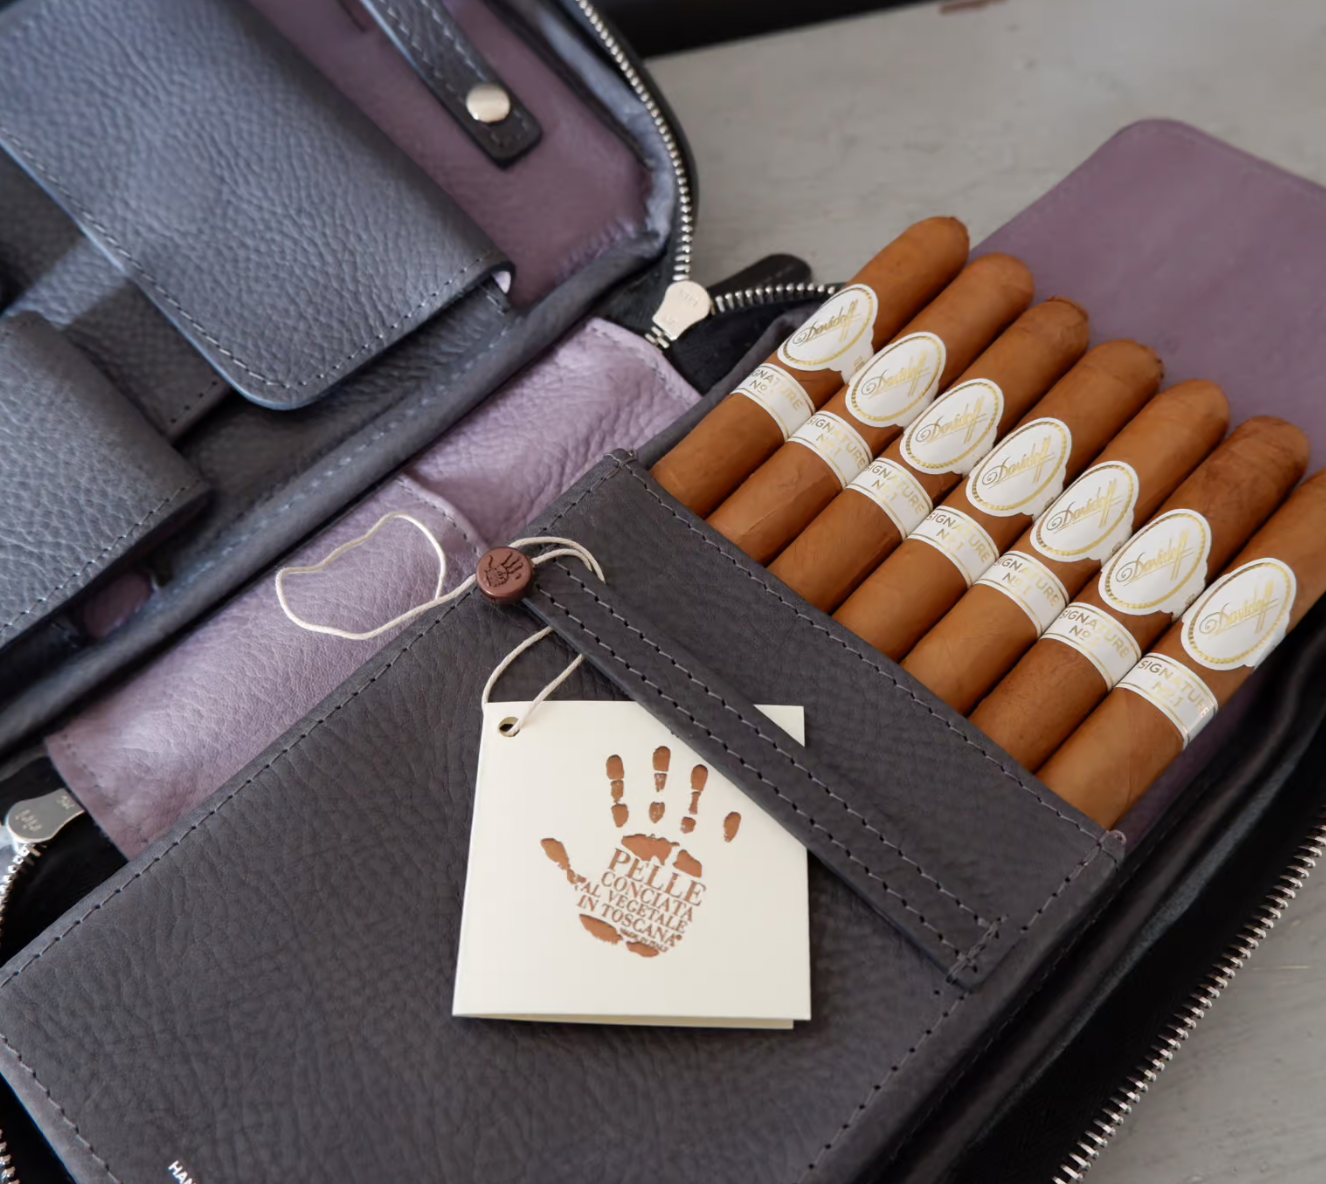 The Cigar Holder Cigar Travel Case Brown & Burgundy Leather – No6Cavendish